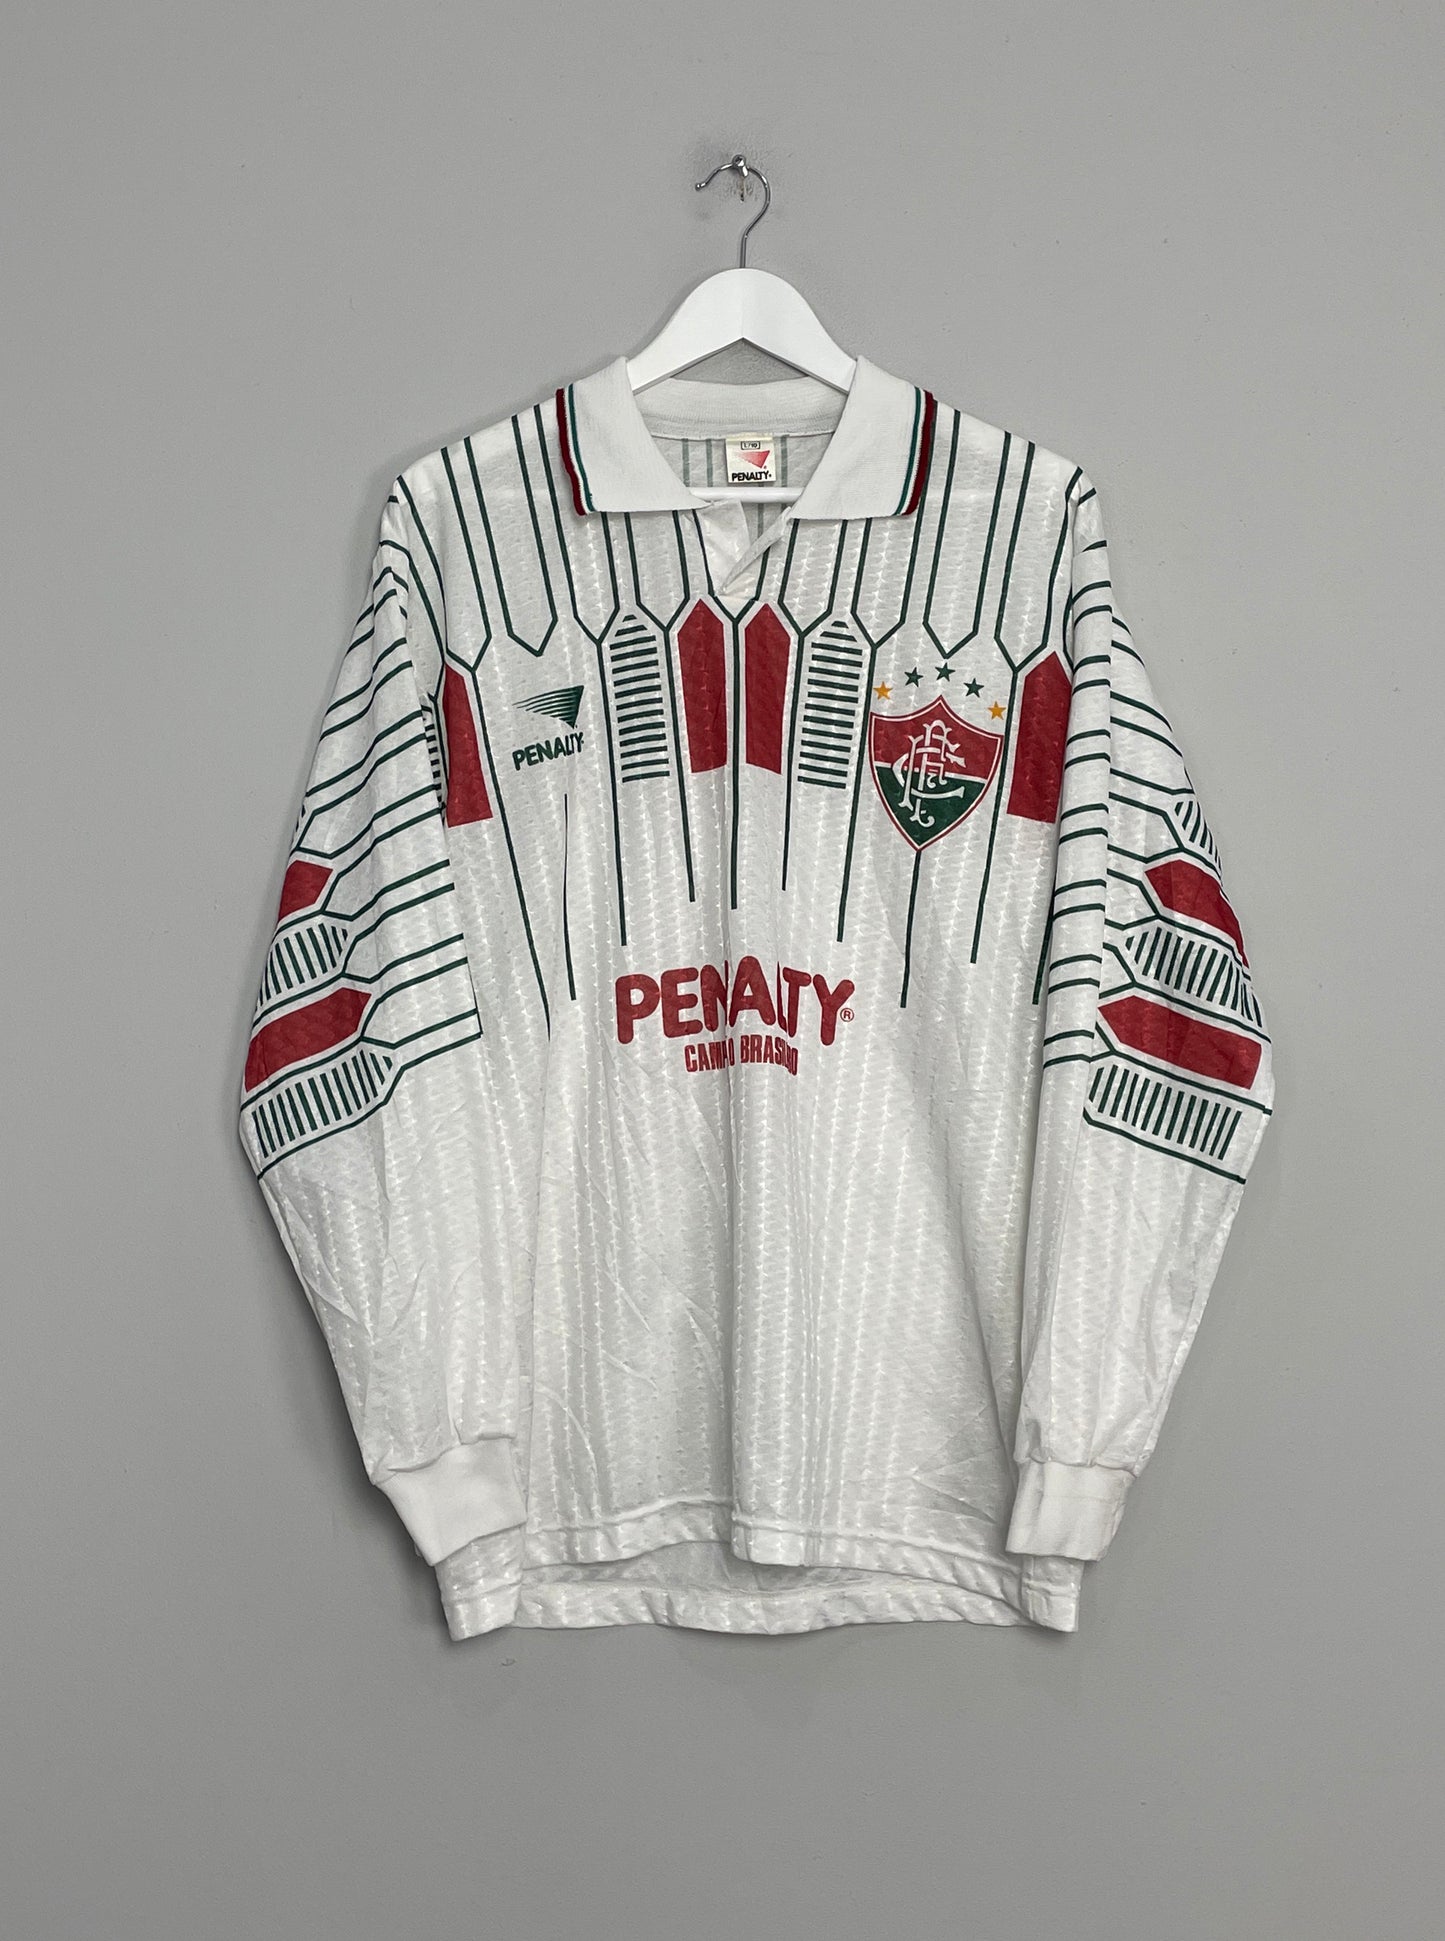 Image of the Fluminense shirt from the 1989/90 season